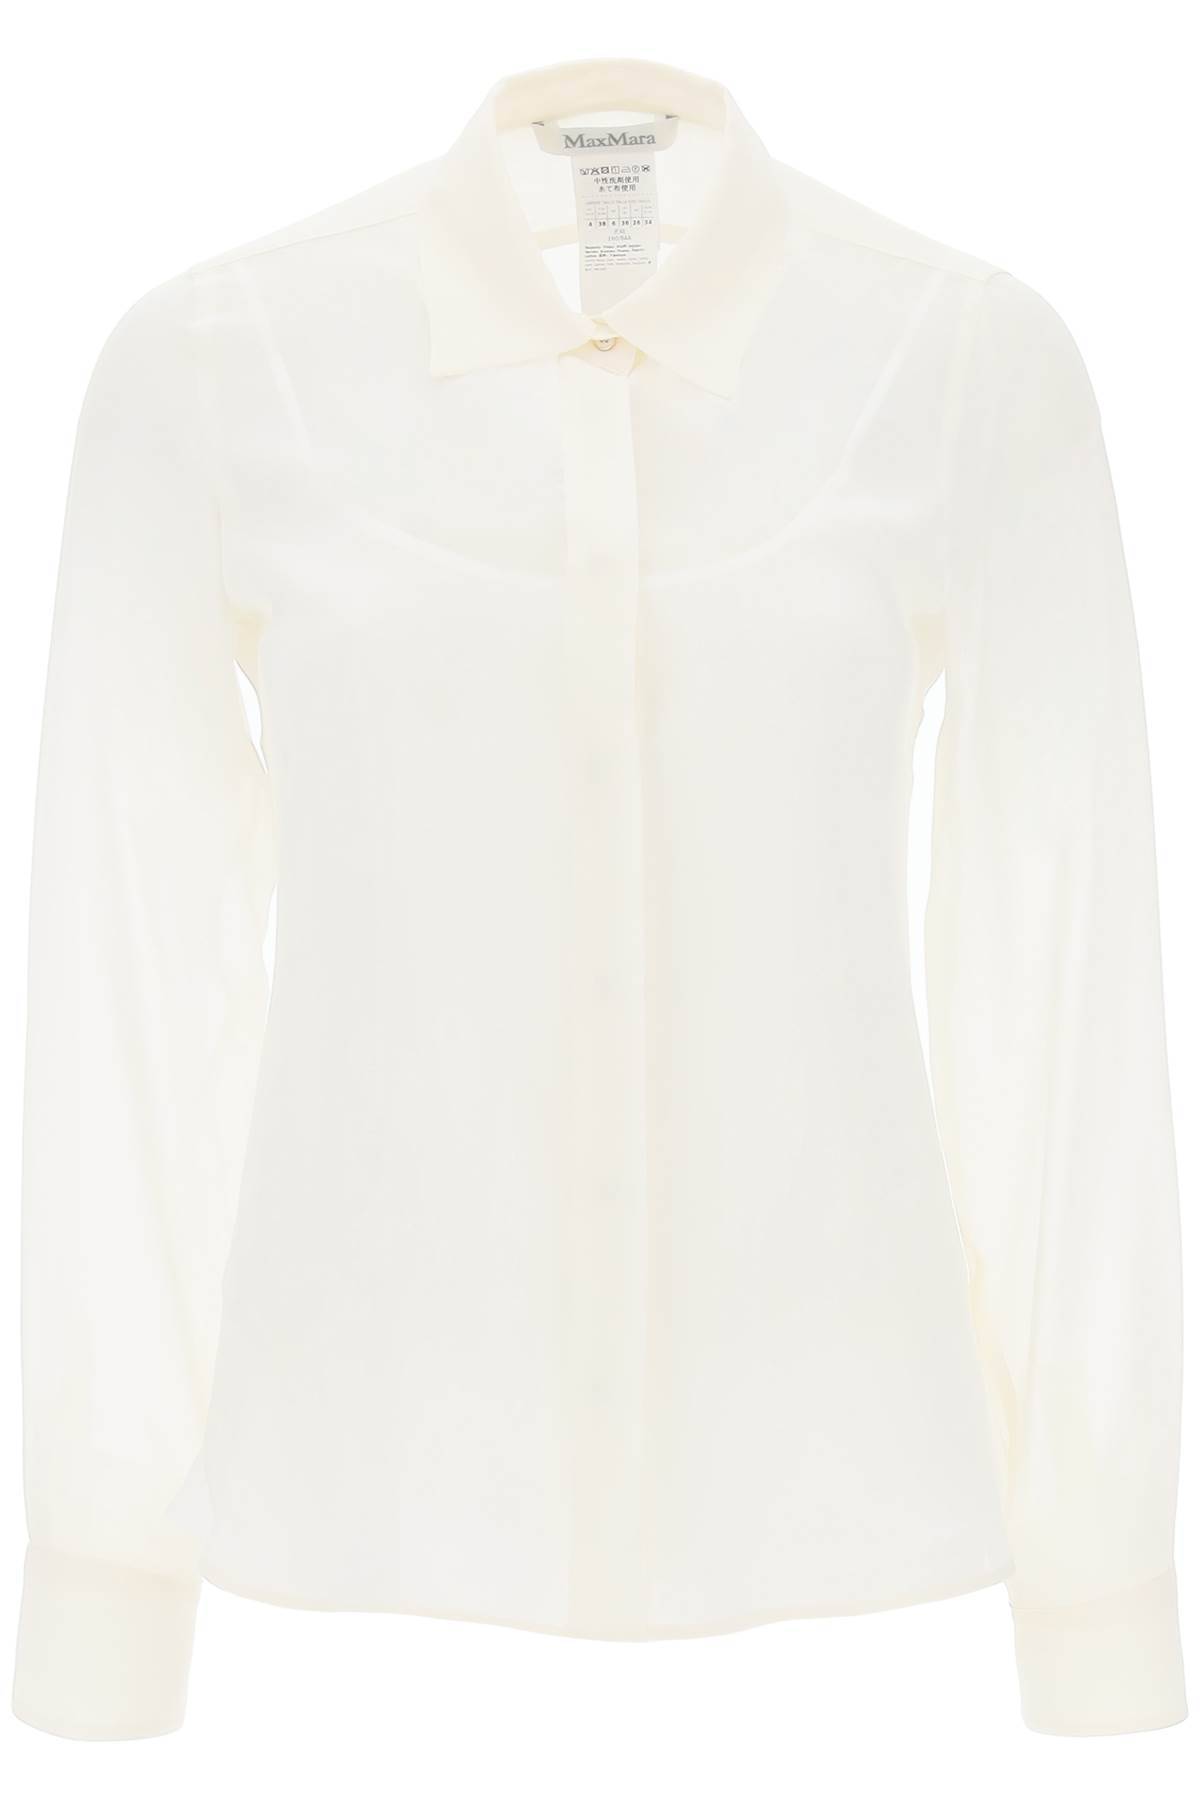 Max Mara 'manche' Silk Georgette Shirt In White